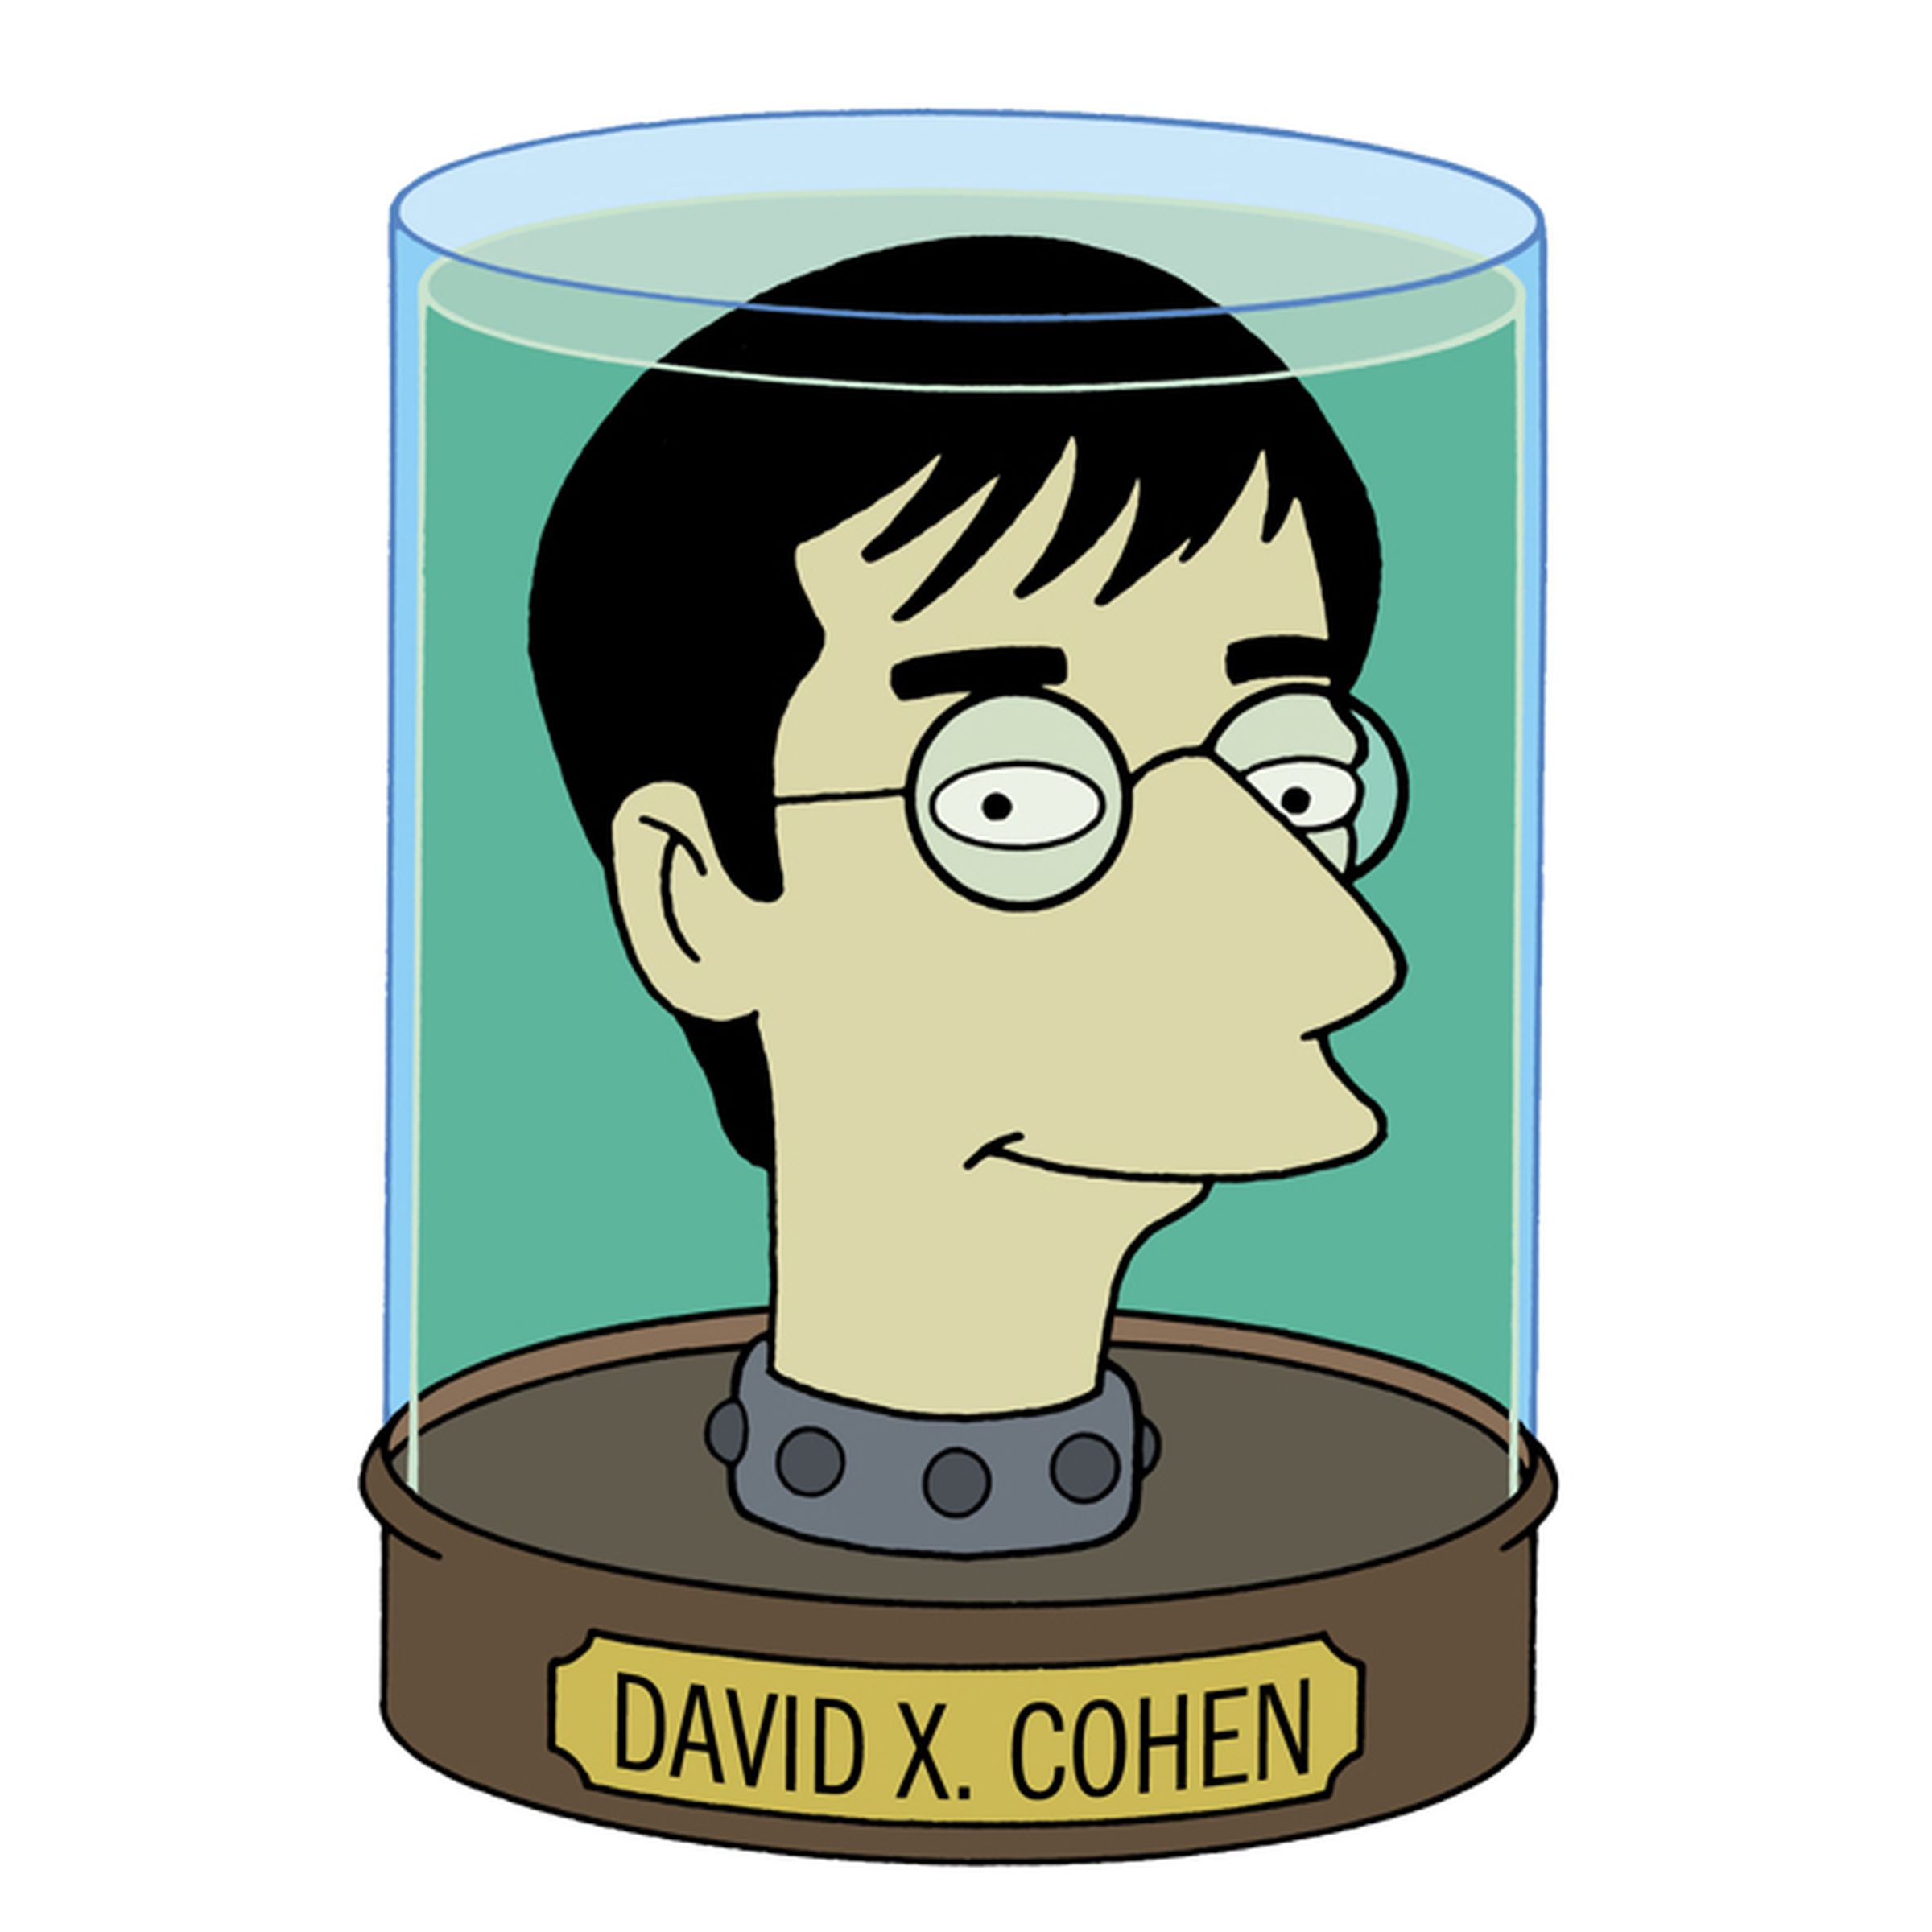 David X. Cohen